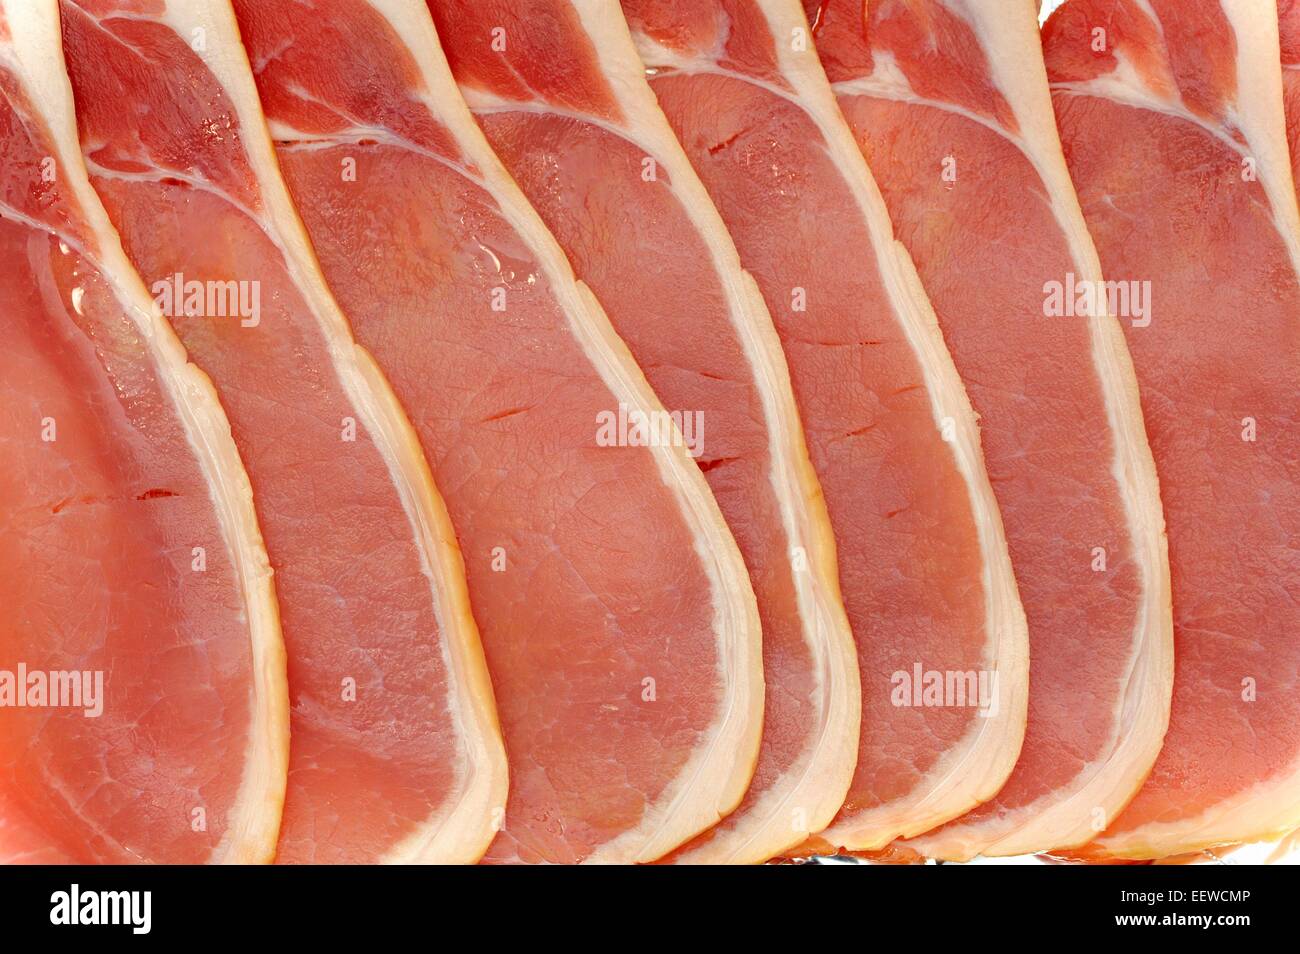 Rashers of raw uncooked smoked bacon Stock Photo